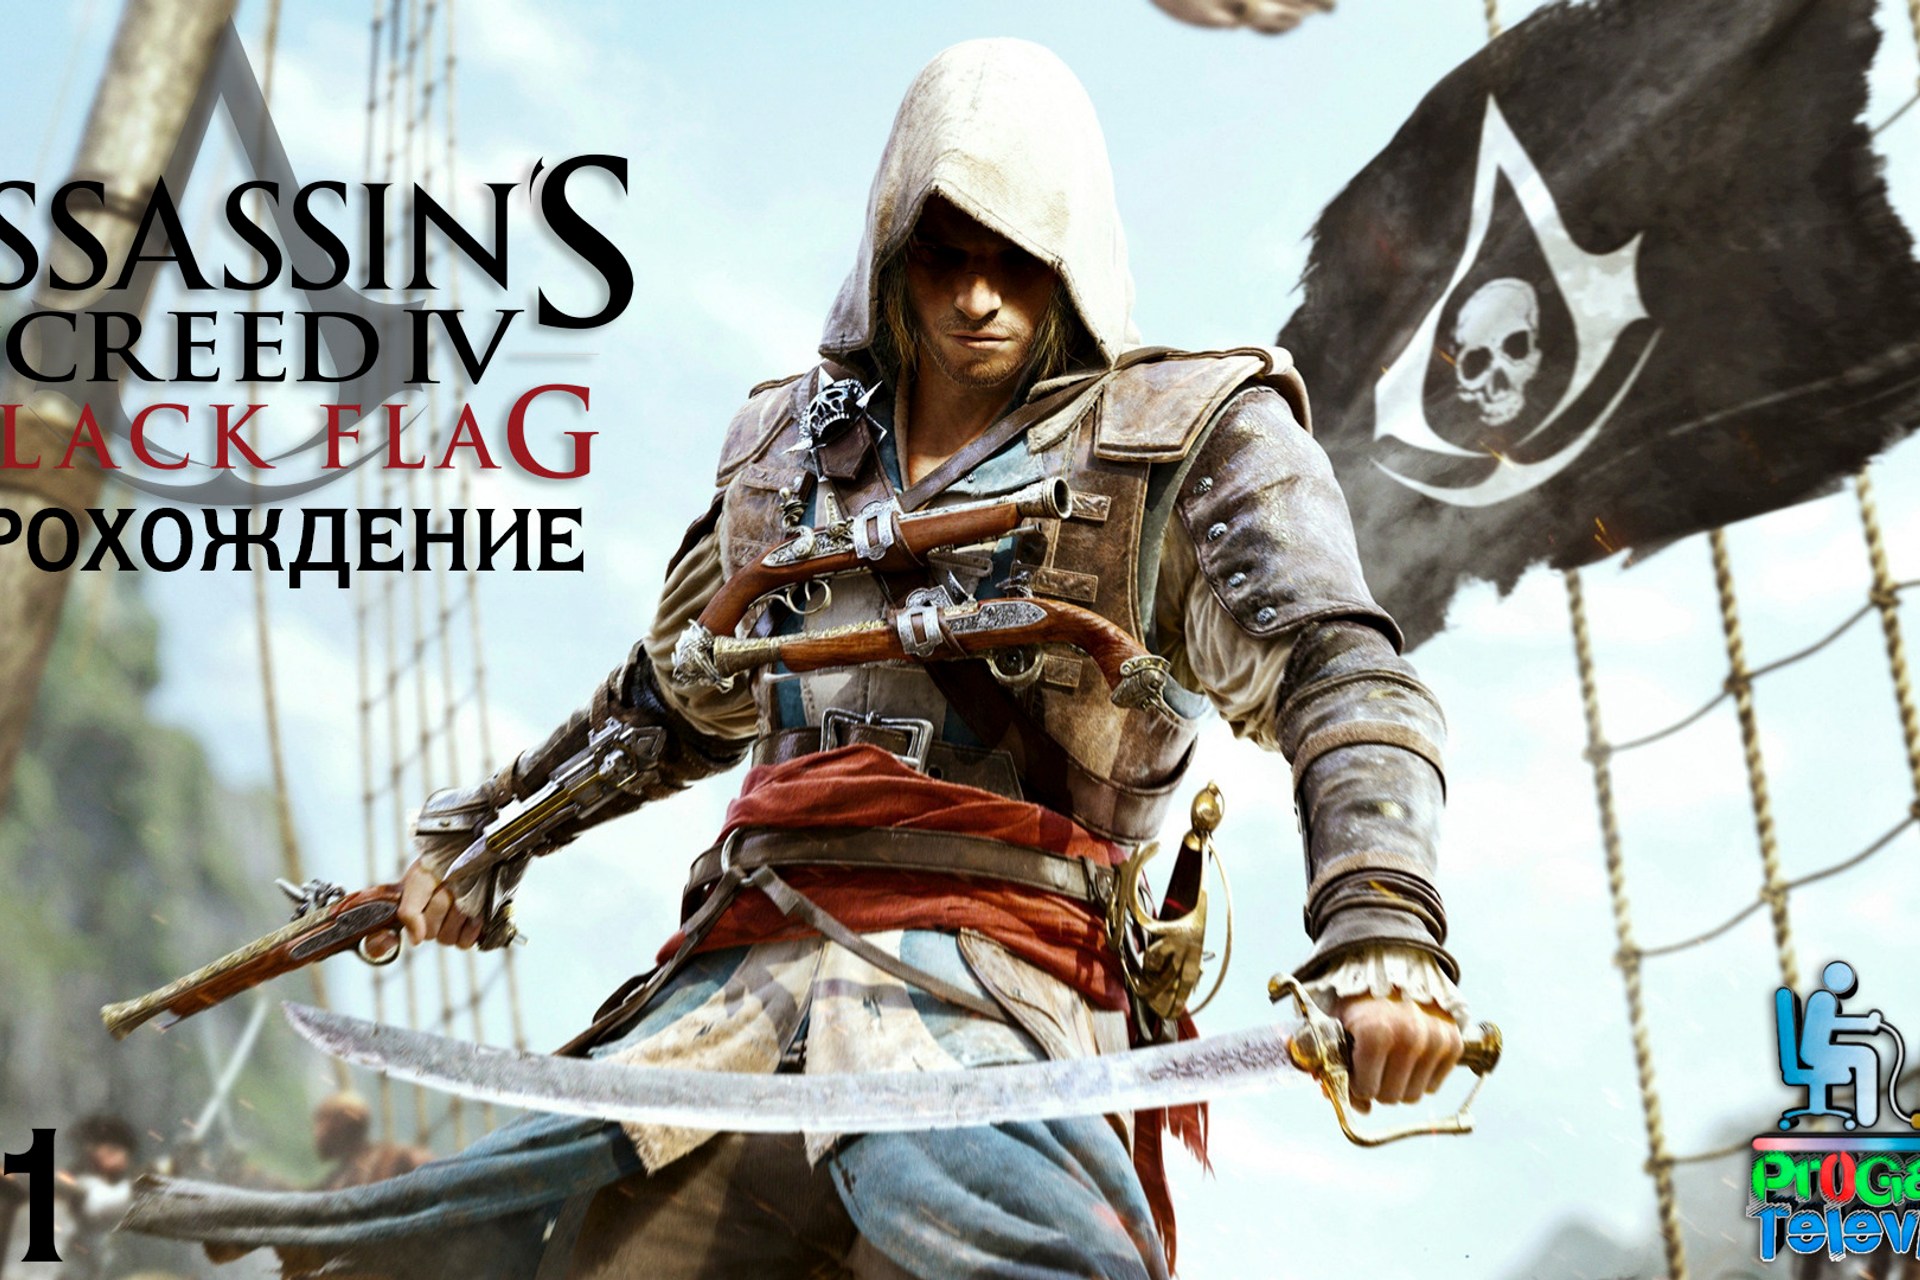 Assassin's Creed IV Black Flag. 502 44 Assassins Creed 4 Black Flag. 502 44 Assassins Creed 4 Black.